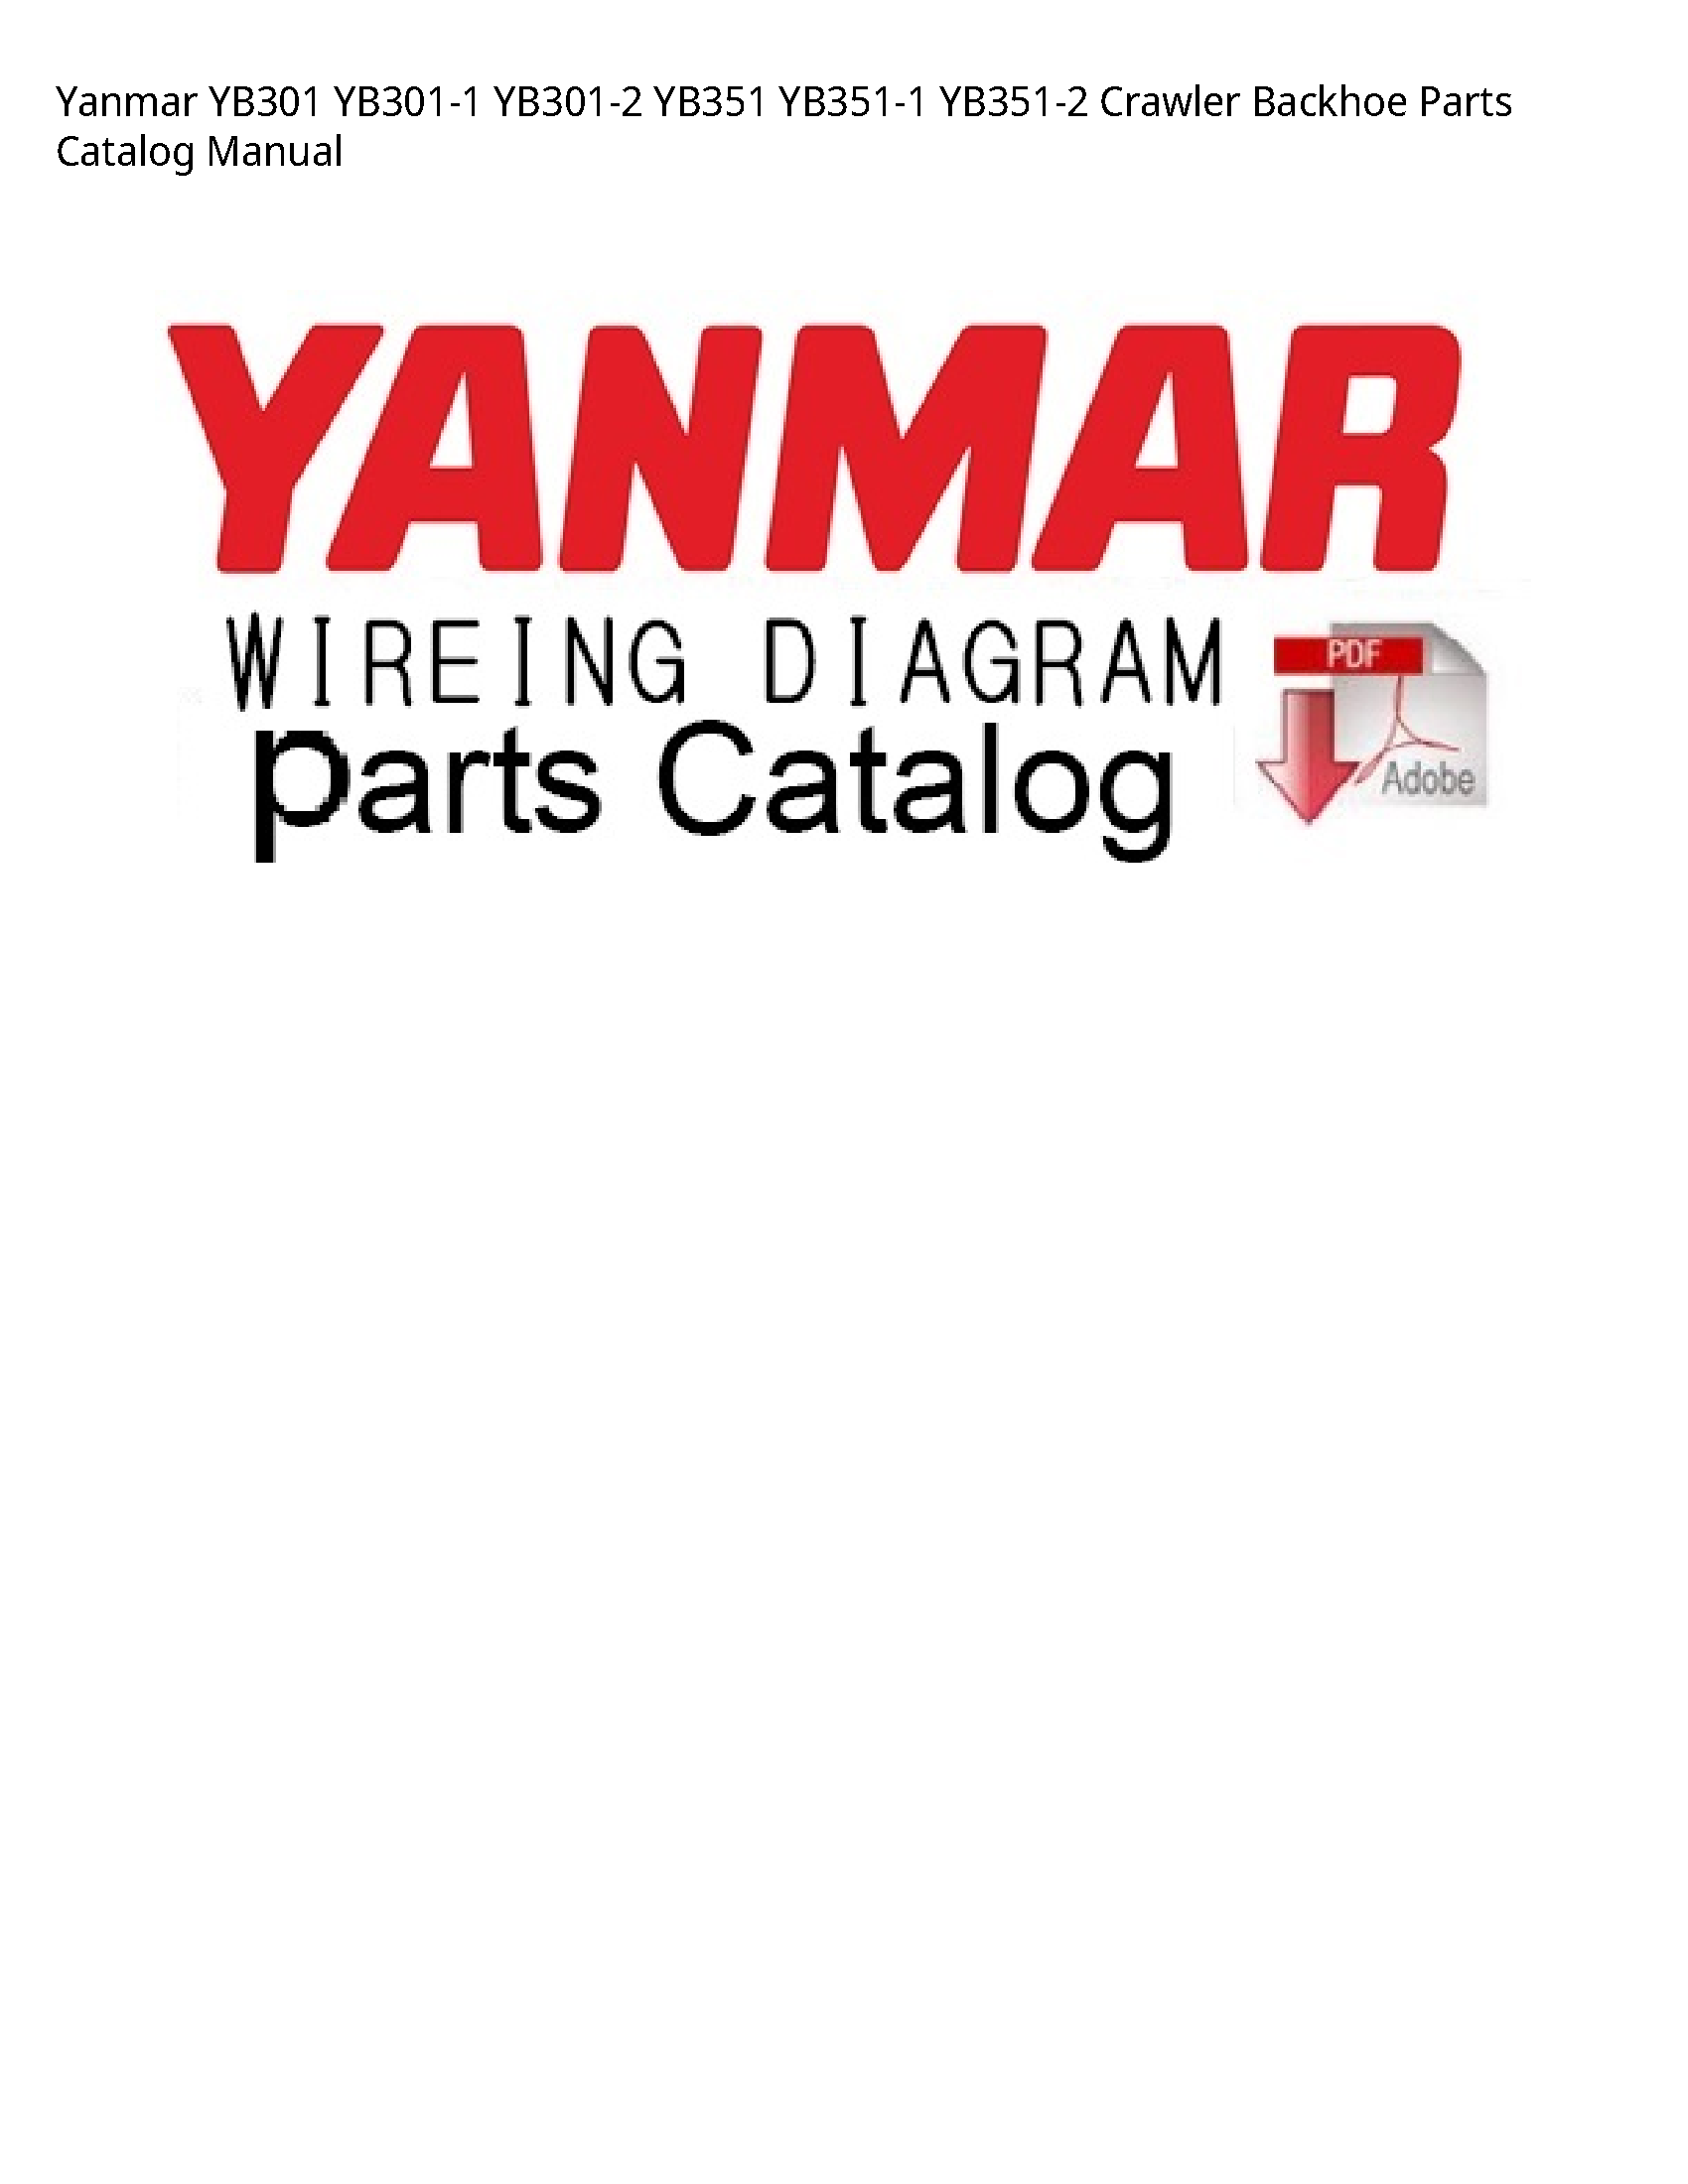 Yanmar YB301 Crawler Backhoe Parts Catalog manual